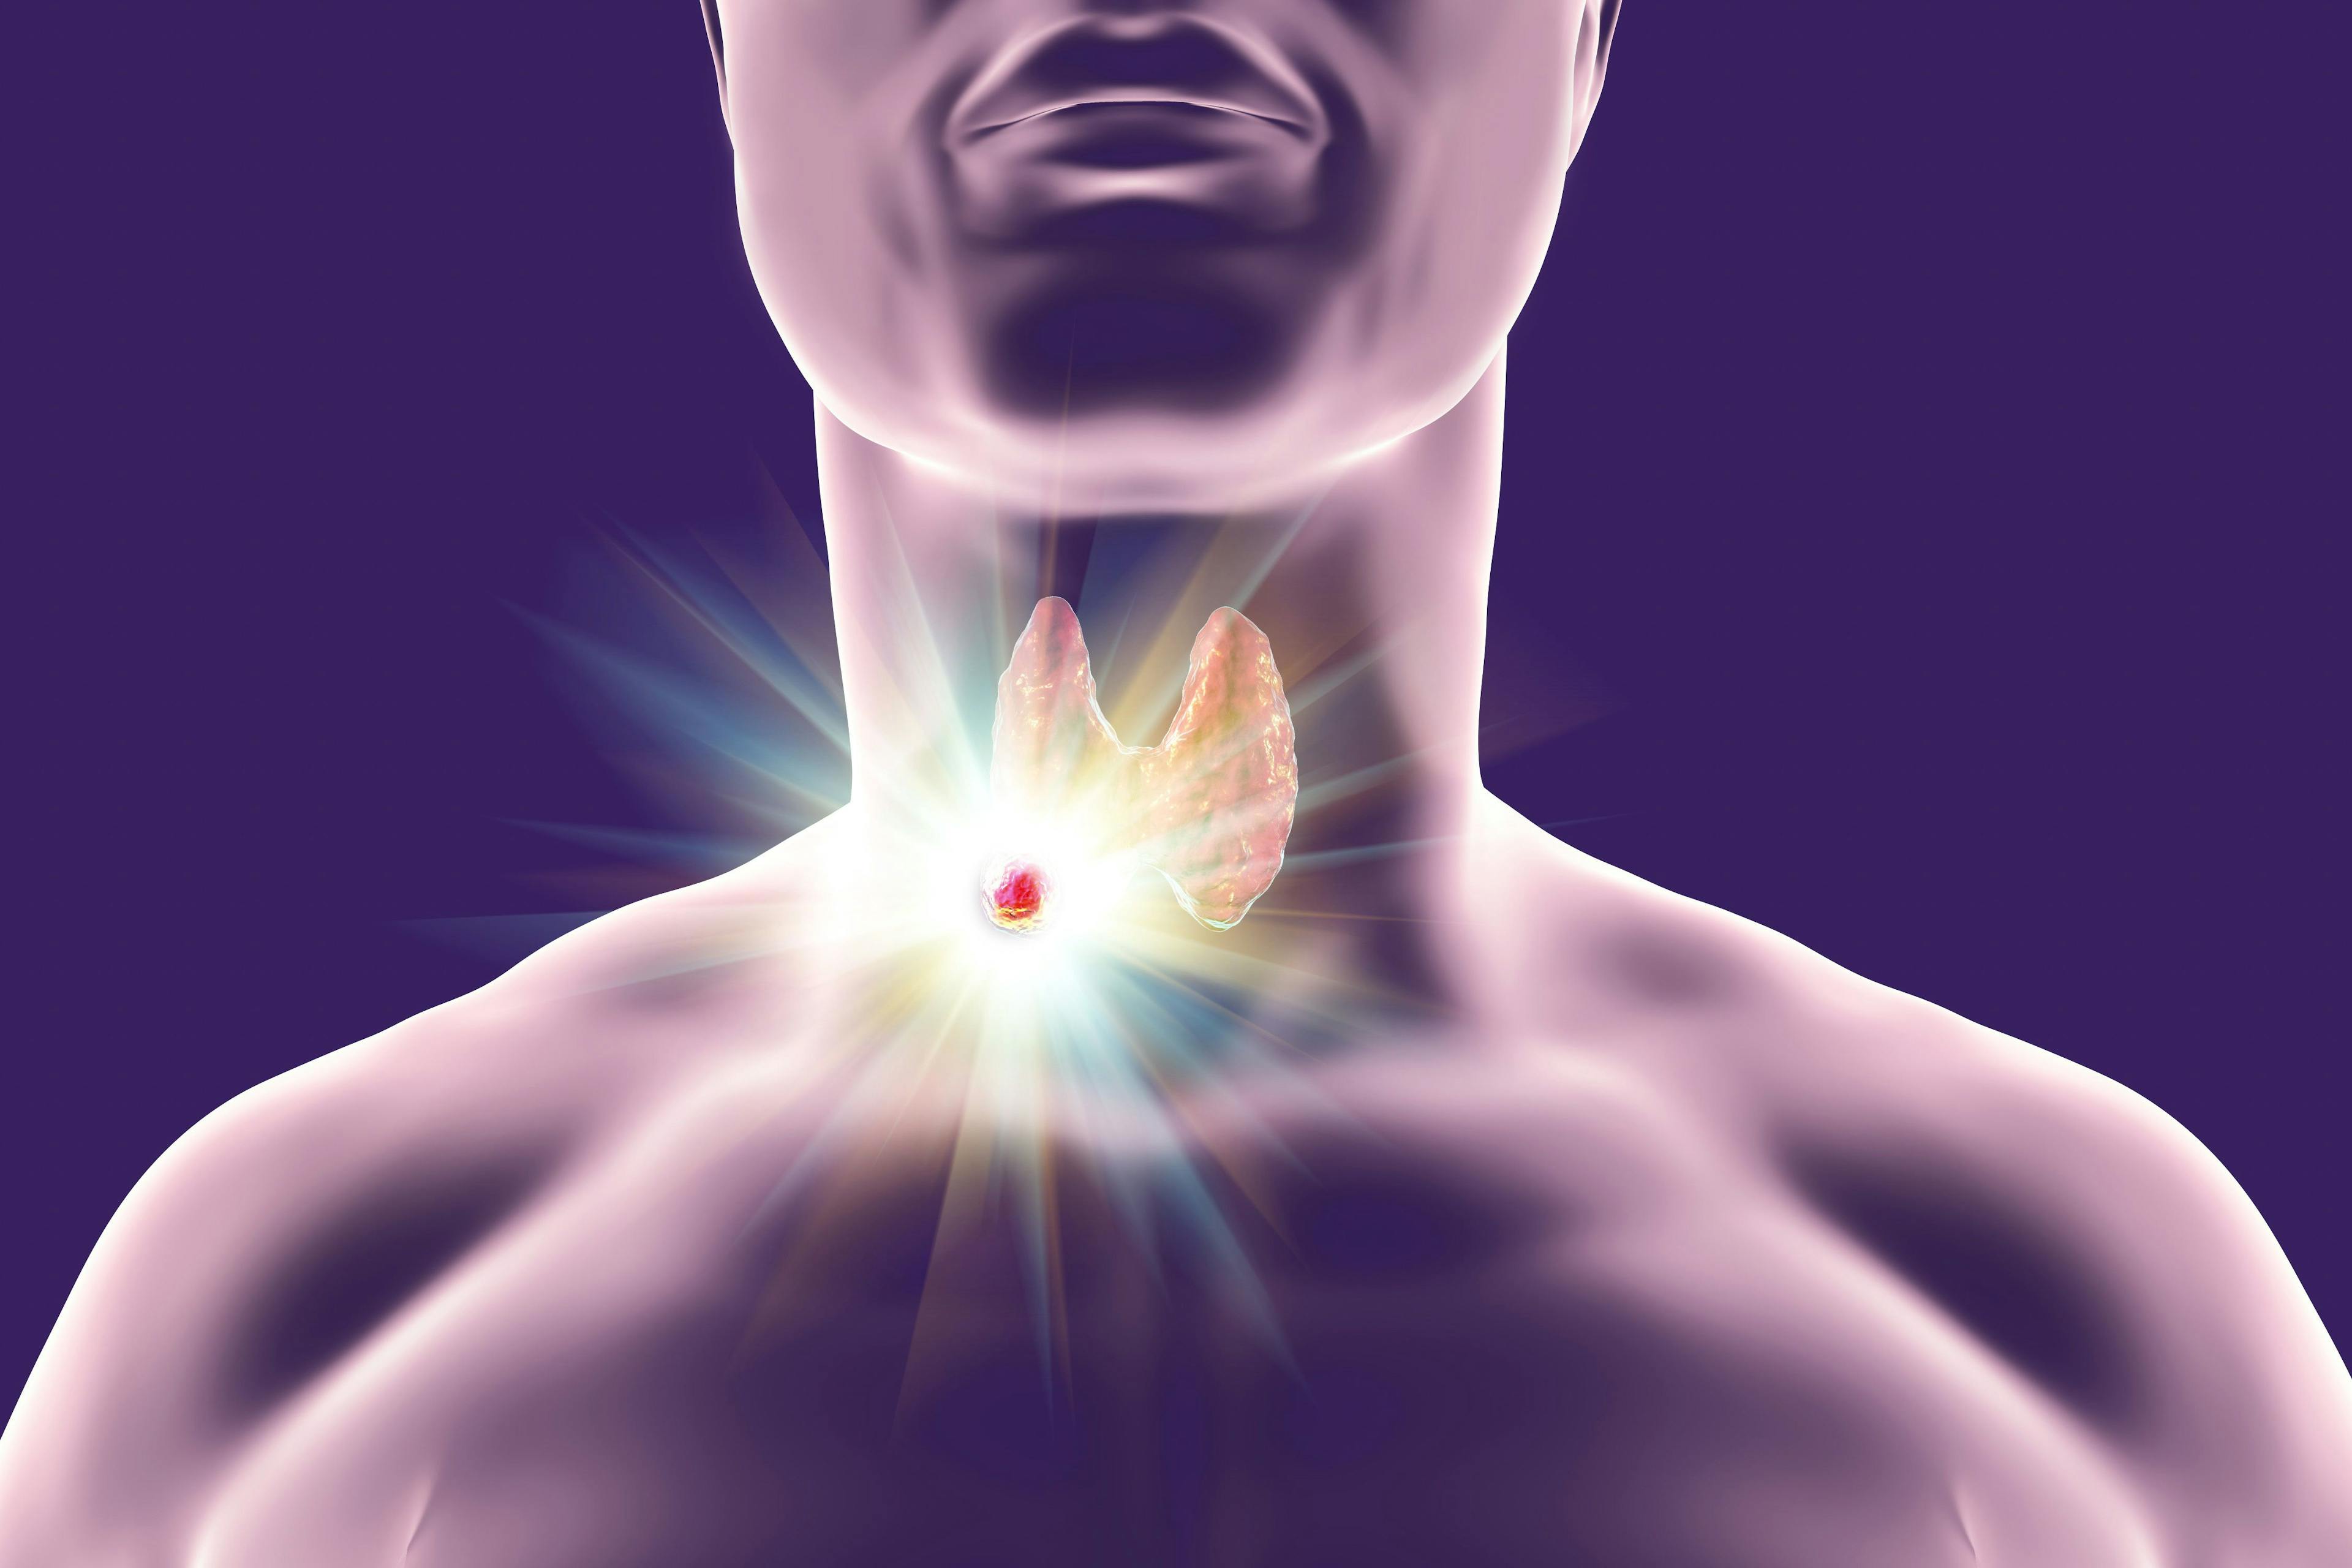 present tumor in thyroid